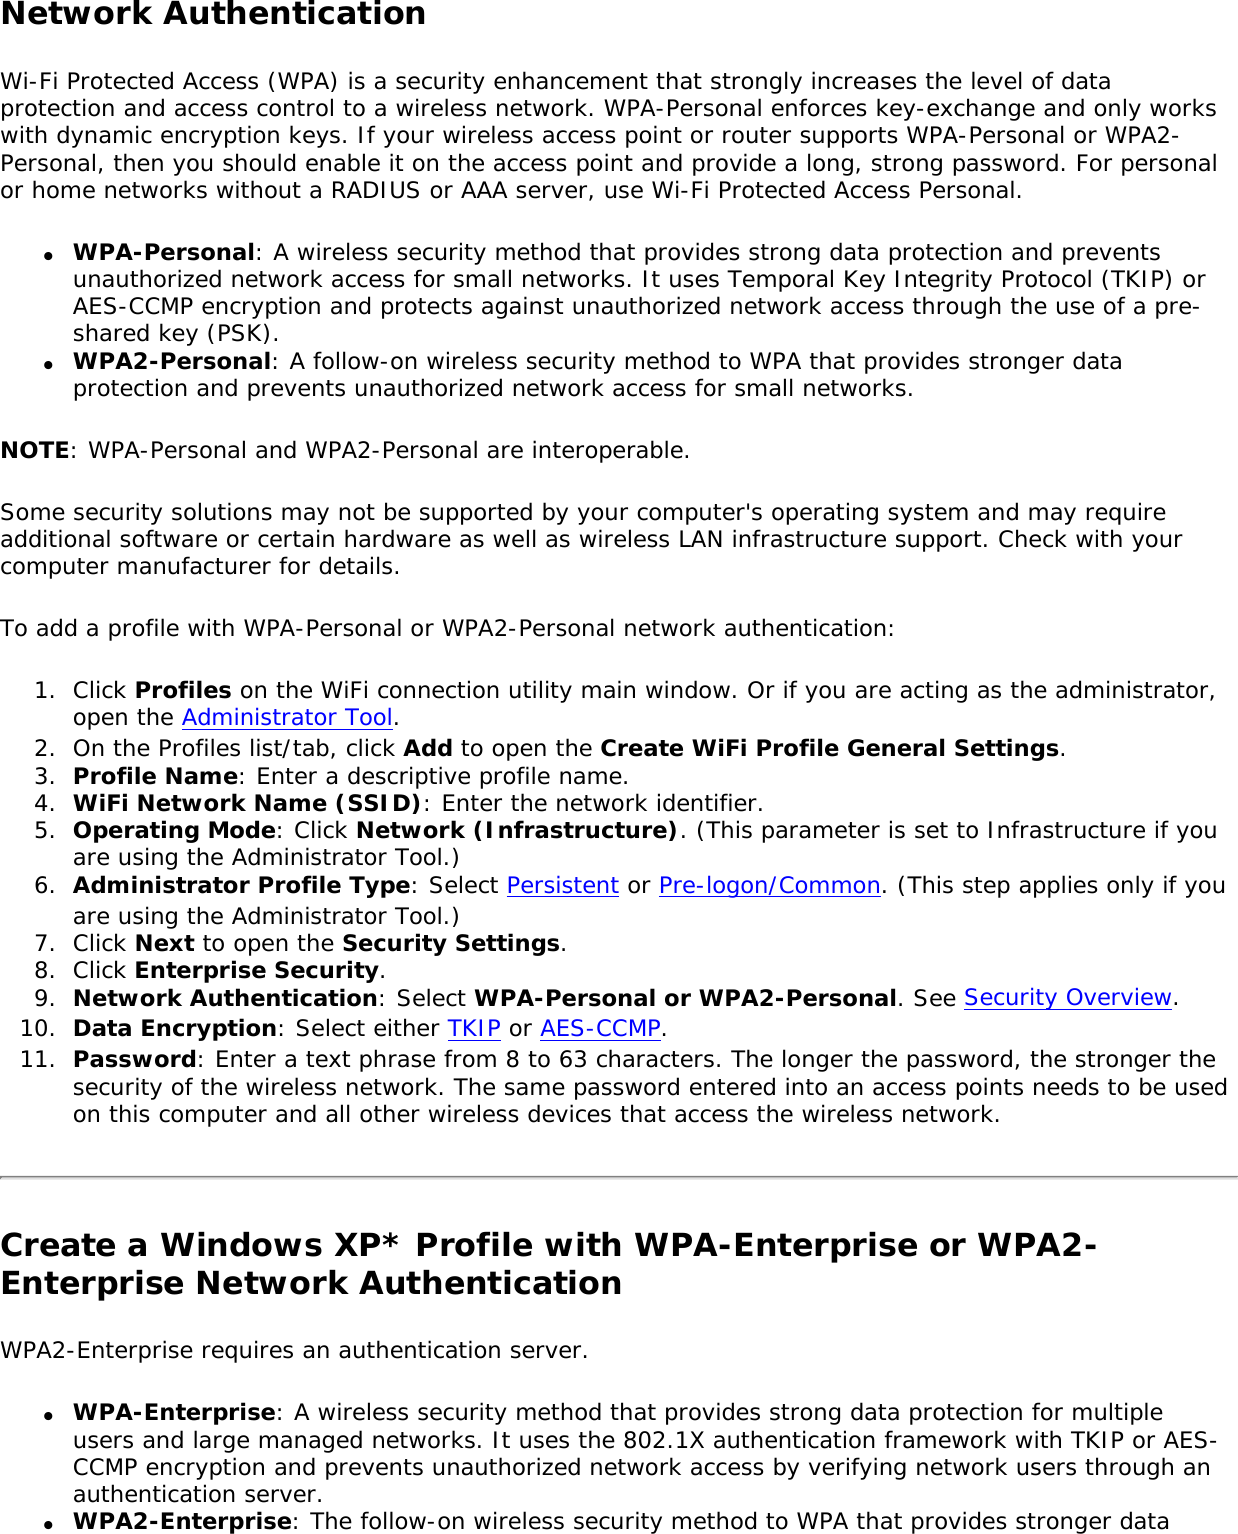 Page 161 of Intel 112BNMU Intel Centrino Wireless-N 1000 User Manual Contents